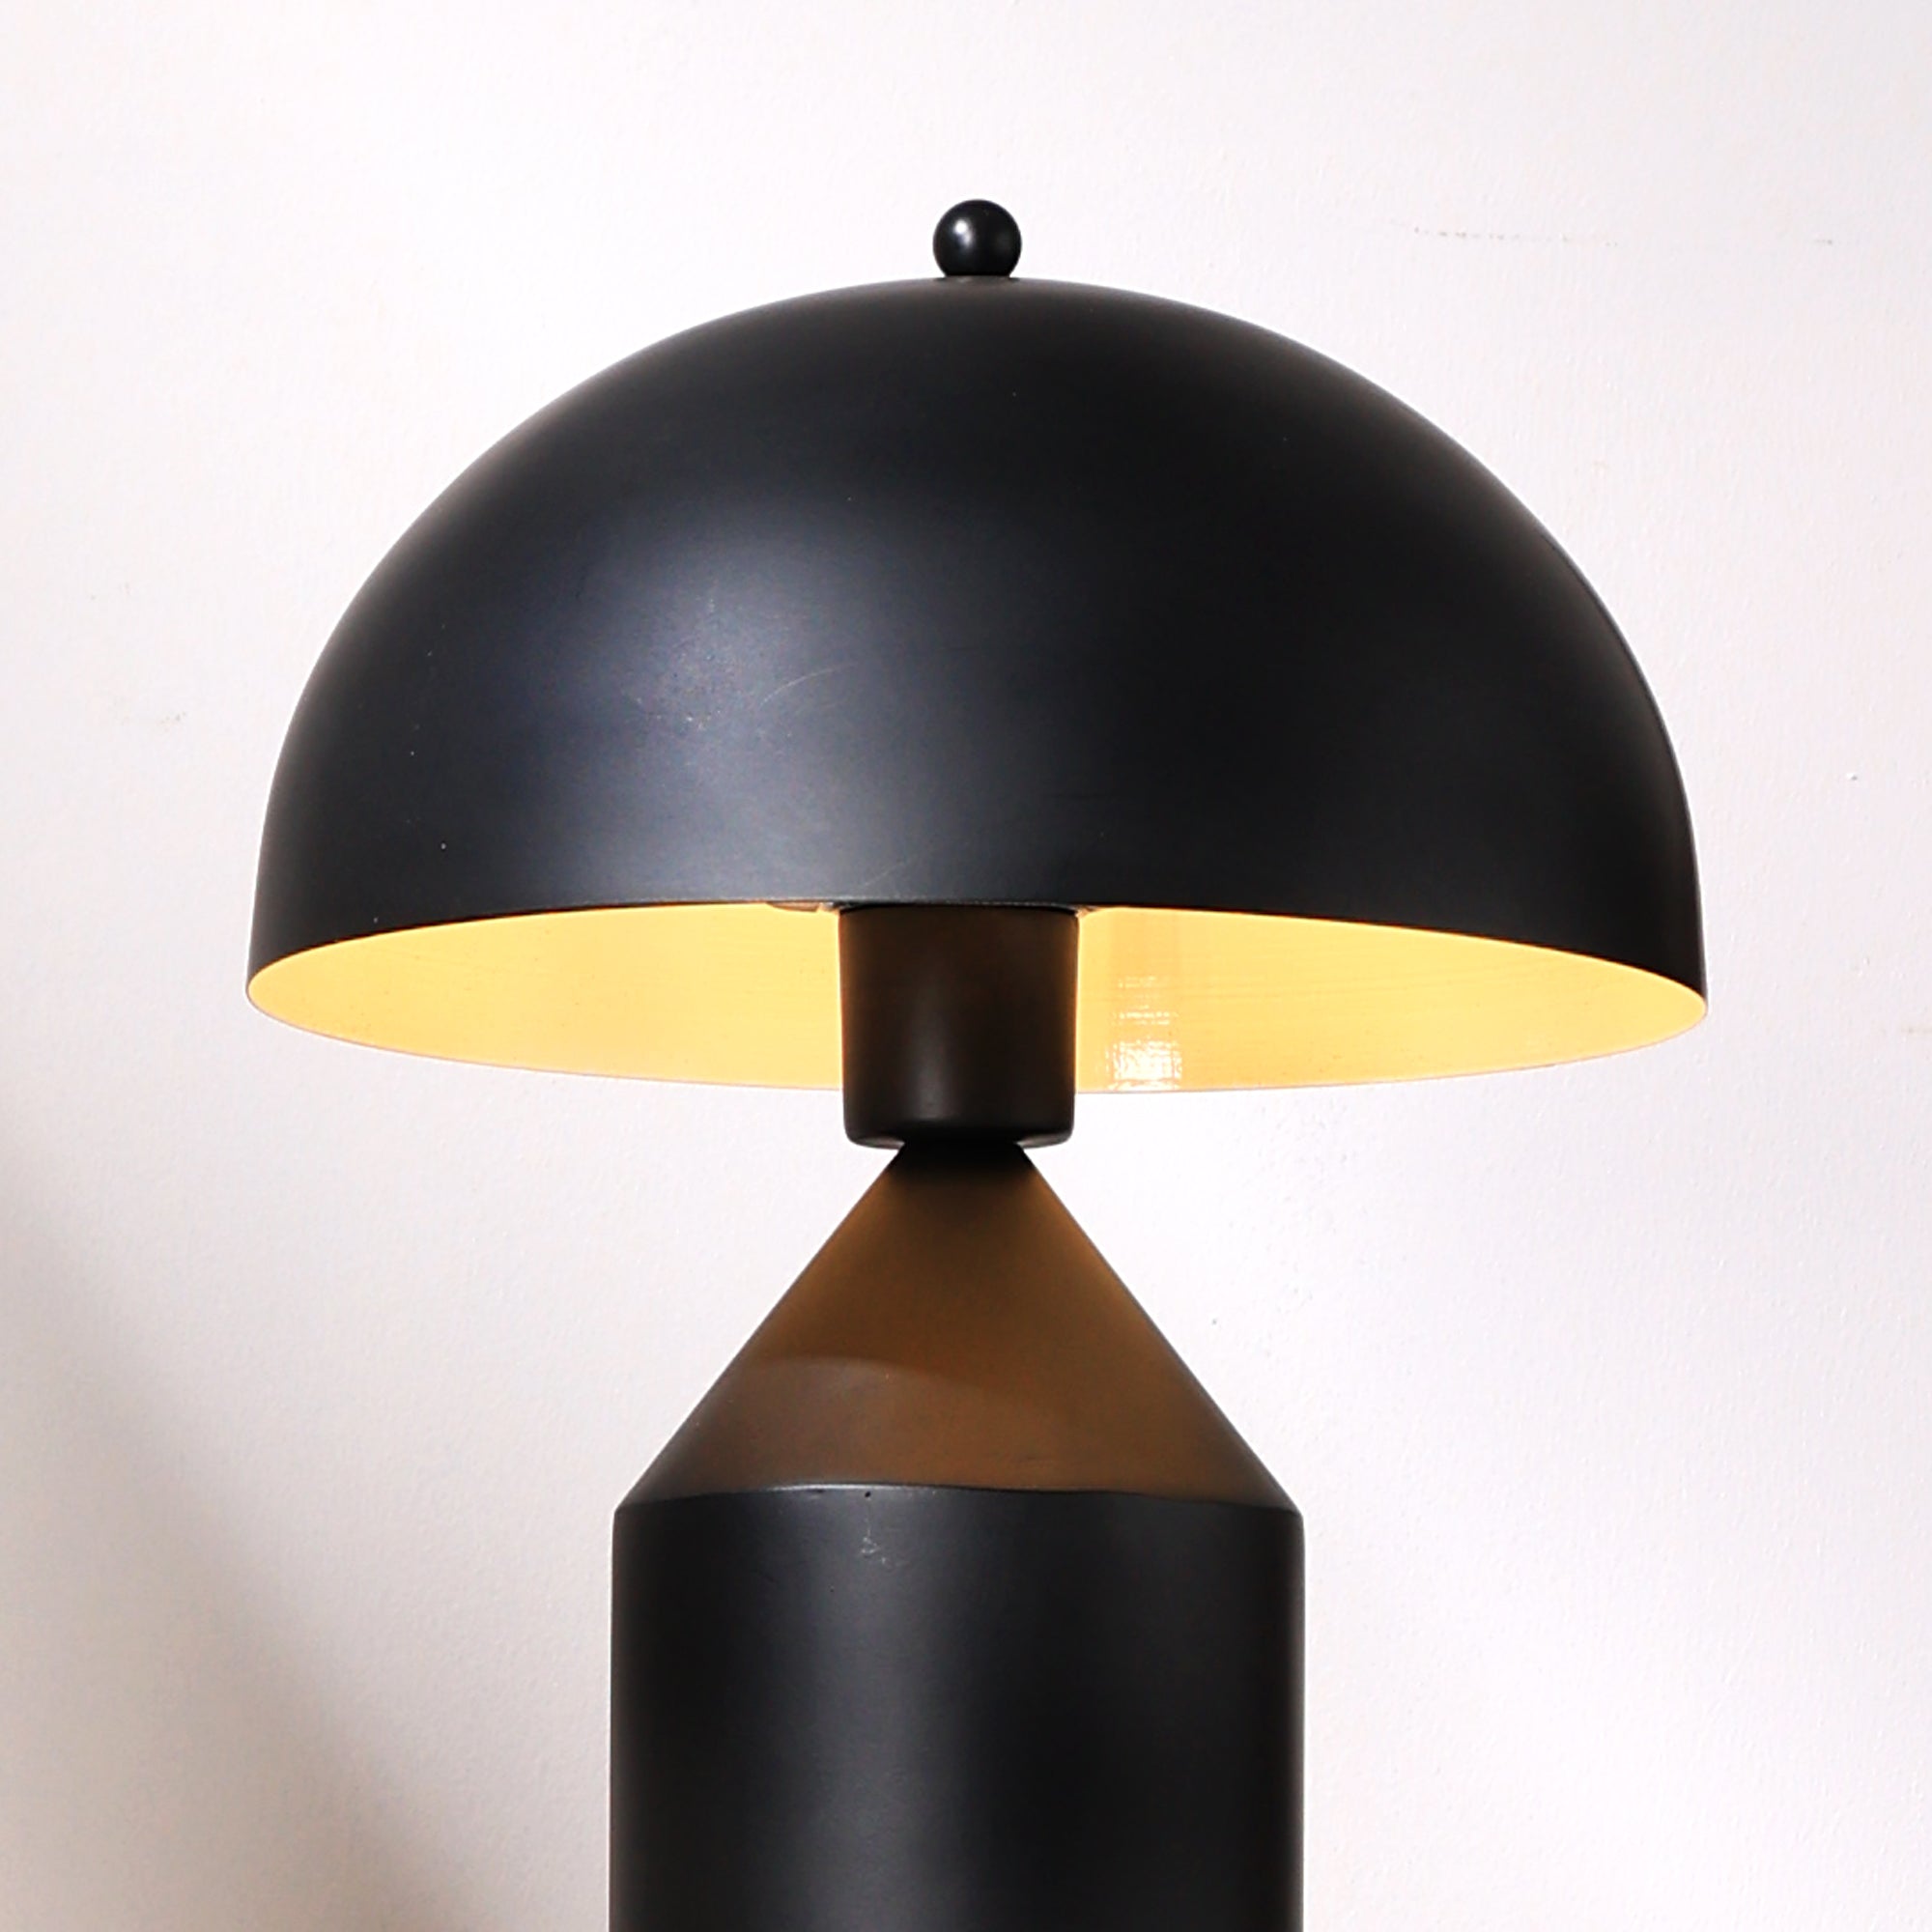 Cone Pagen - Table Lamp - Modern Scandinavian Design, Premium Metallic Finish, Easy Installation